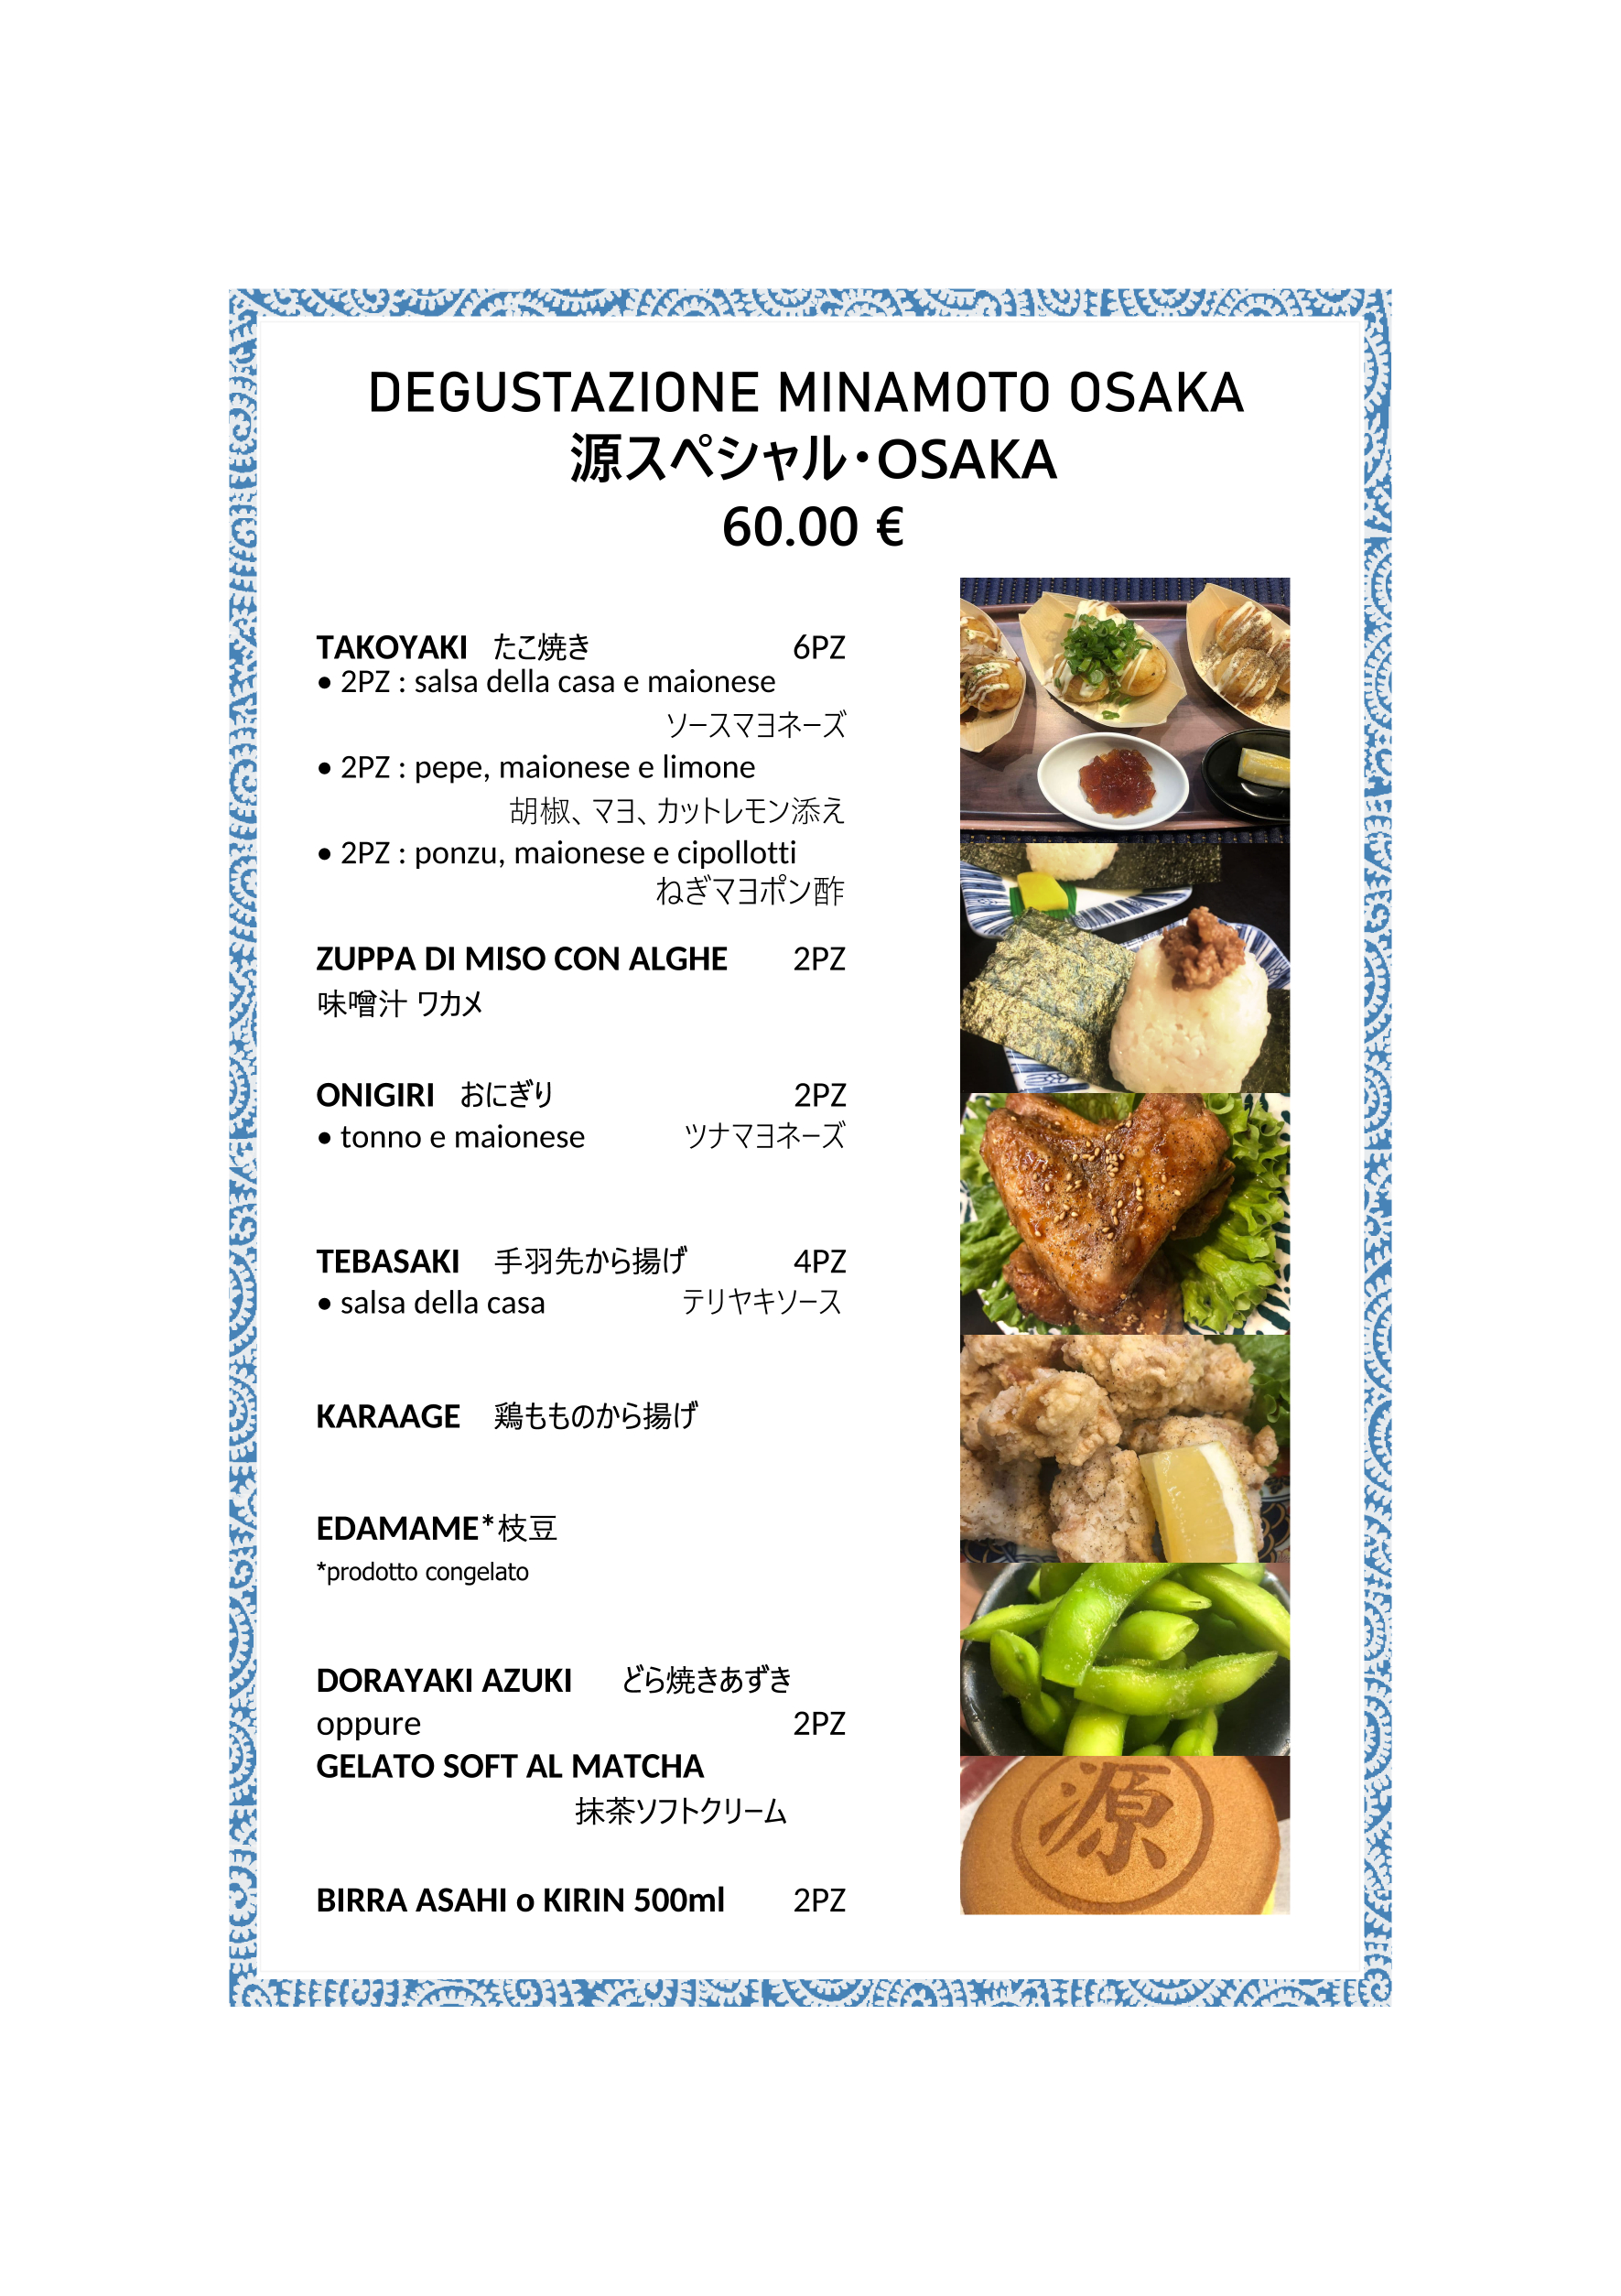 TAKOYAKI E MENU – Takoyaki Minamoto